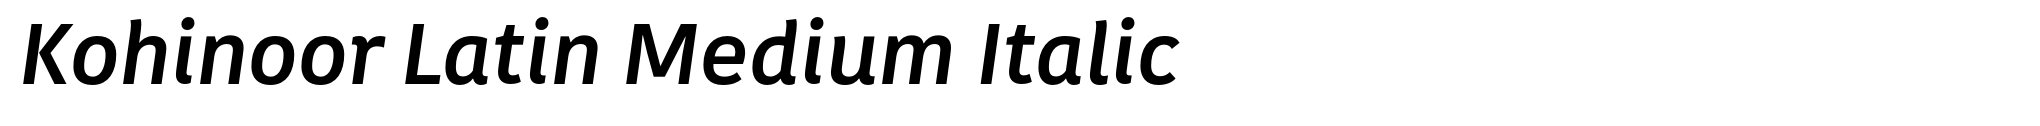 Kohinoor Latin Medium Italic image